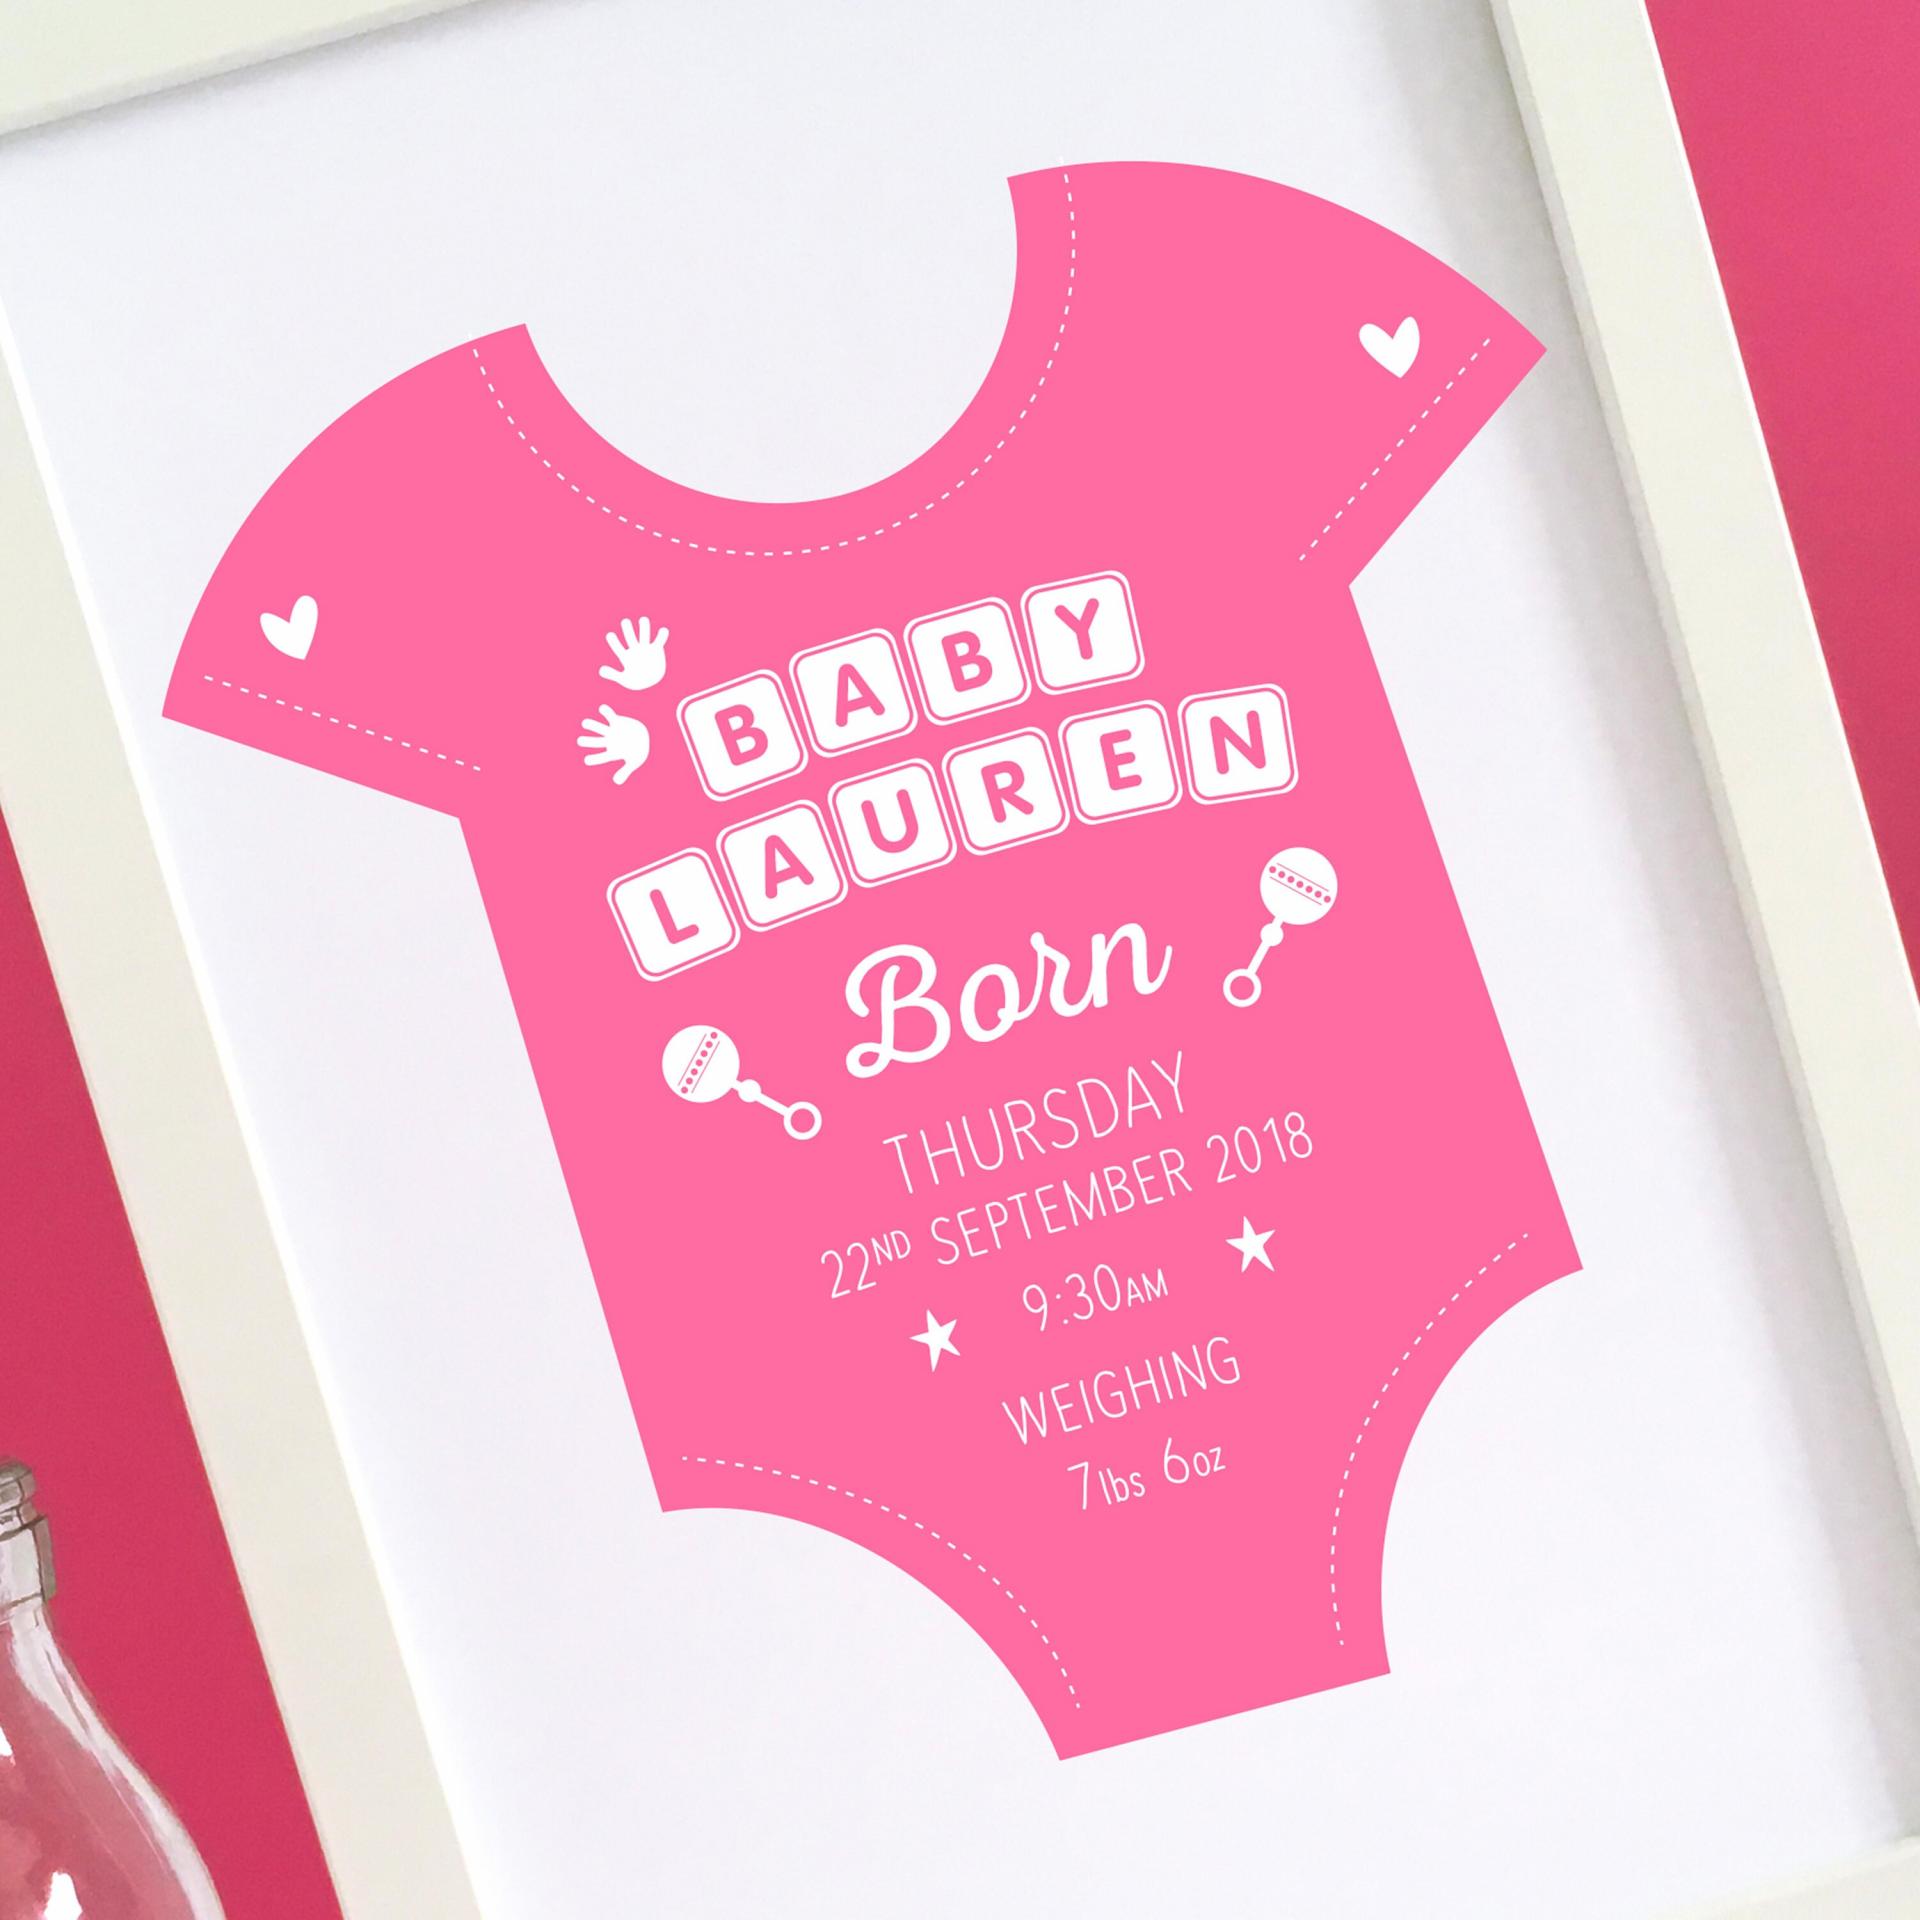 New baby print, Baby girl Birth print, Birth Details Print, New Baby Gift, Baby Birth Chart, Birth Poster, Newborn Birth Print, Birth Stats